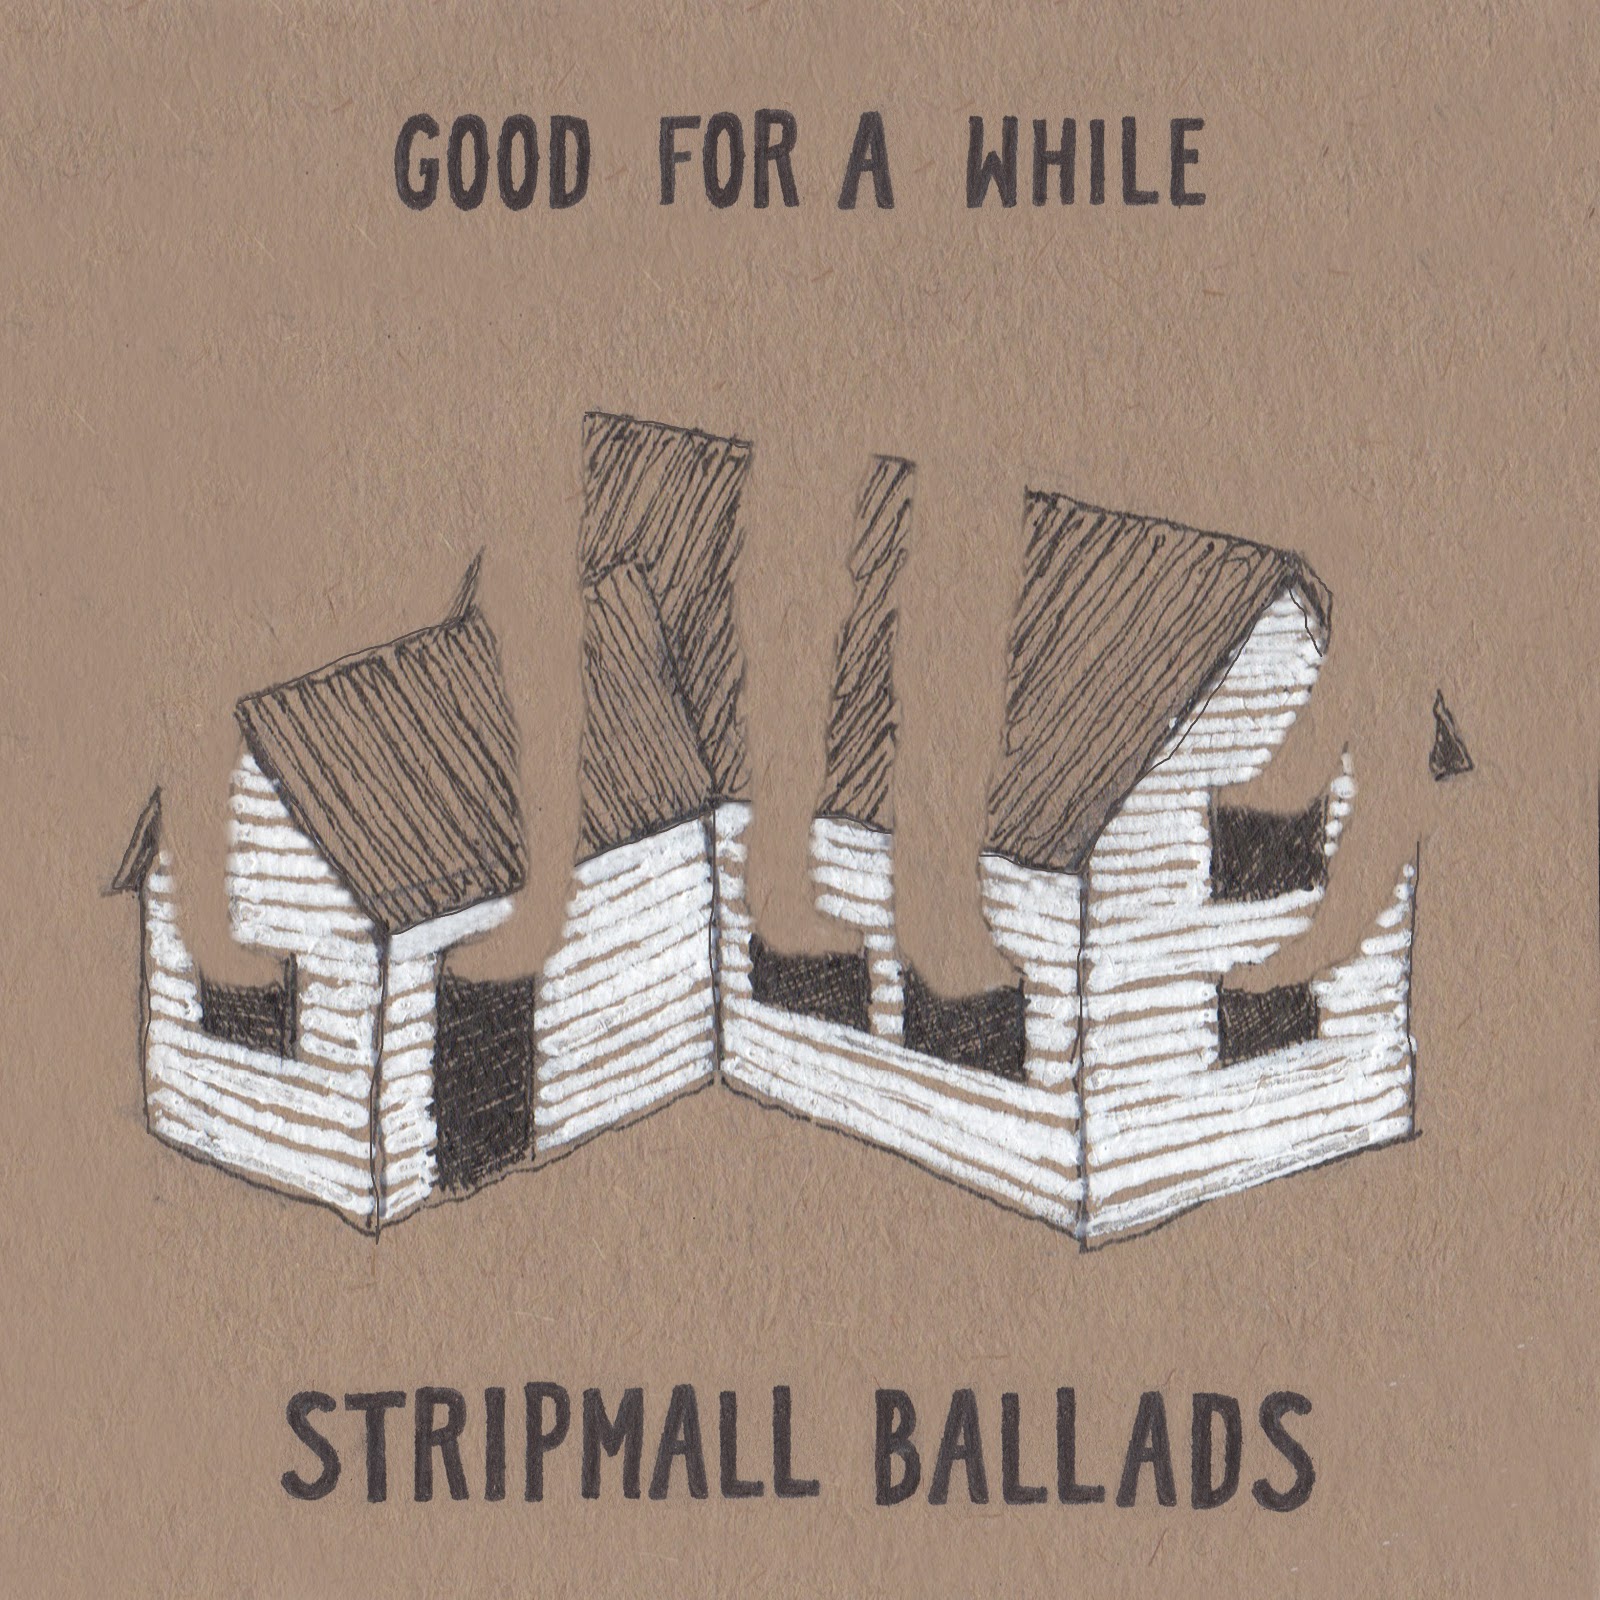 Stripmall ballads good for a while art